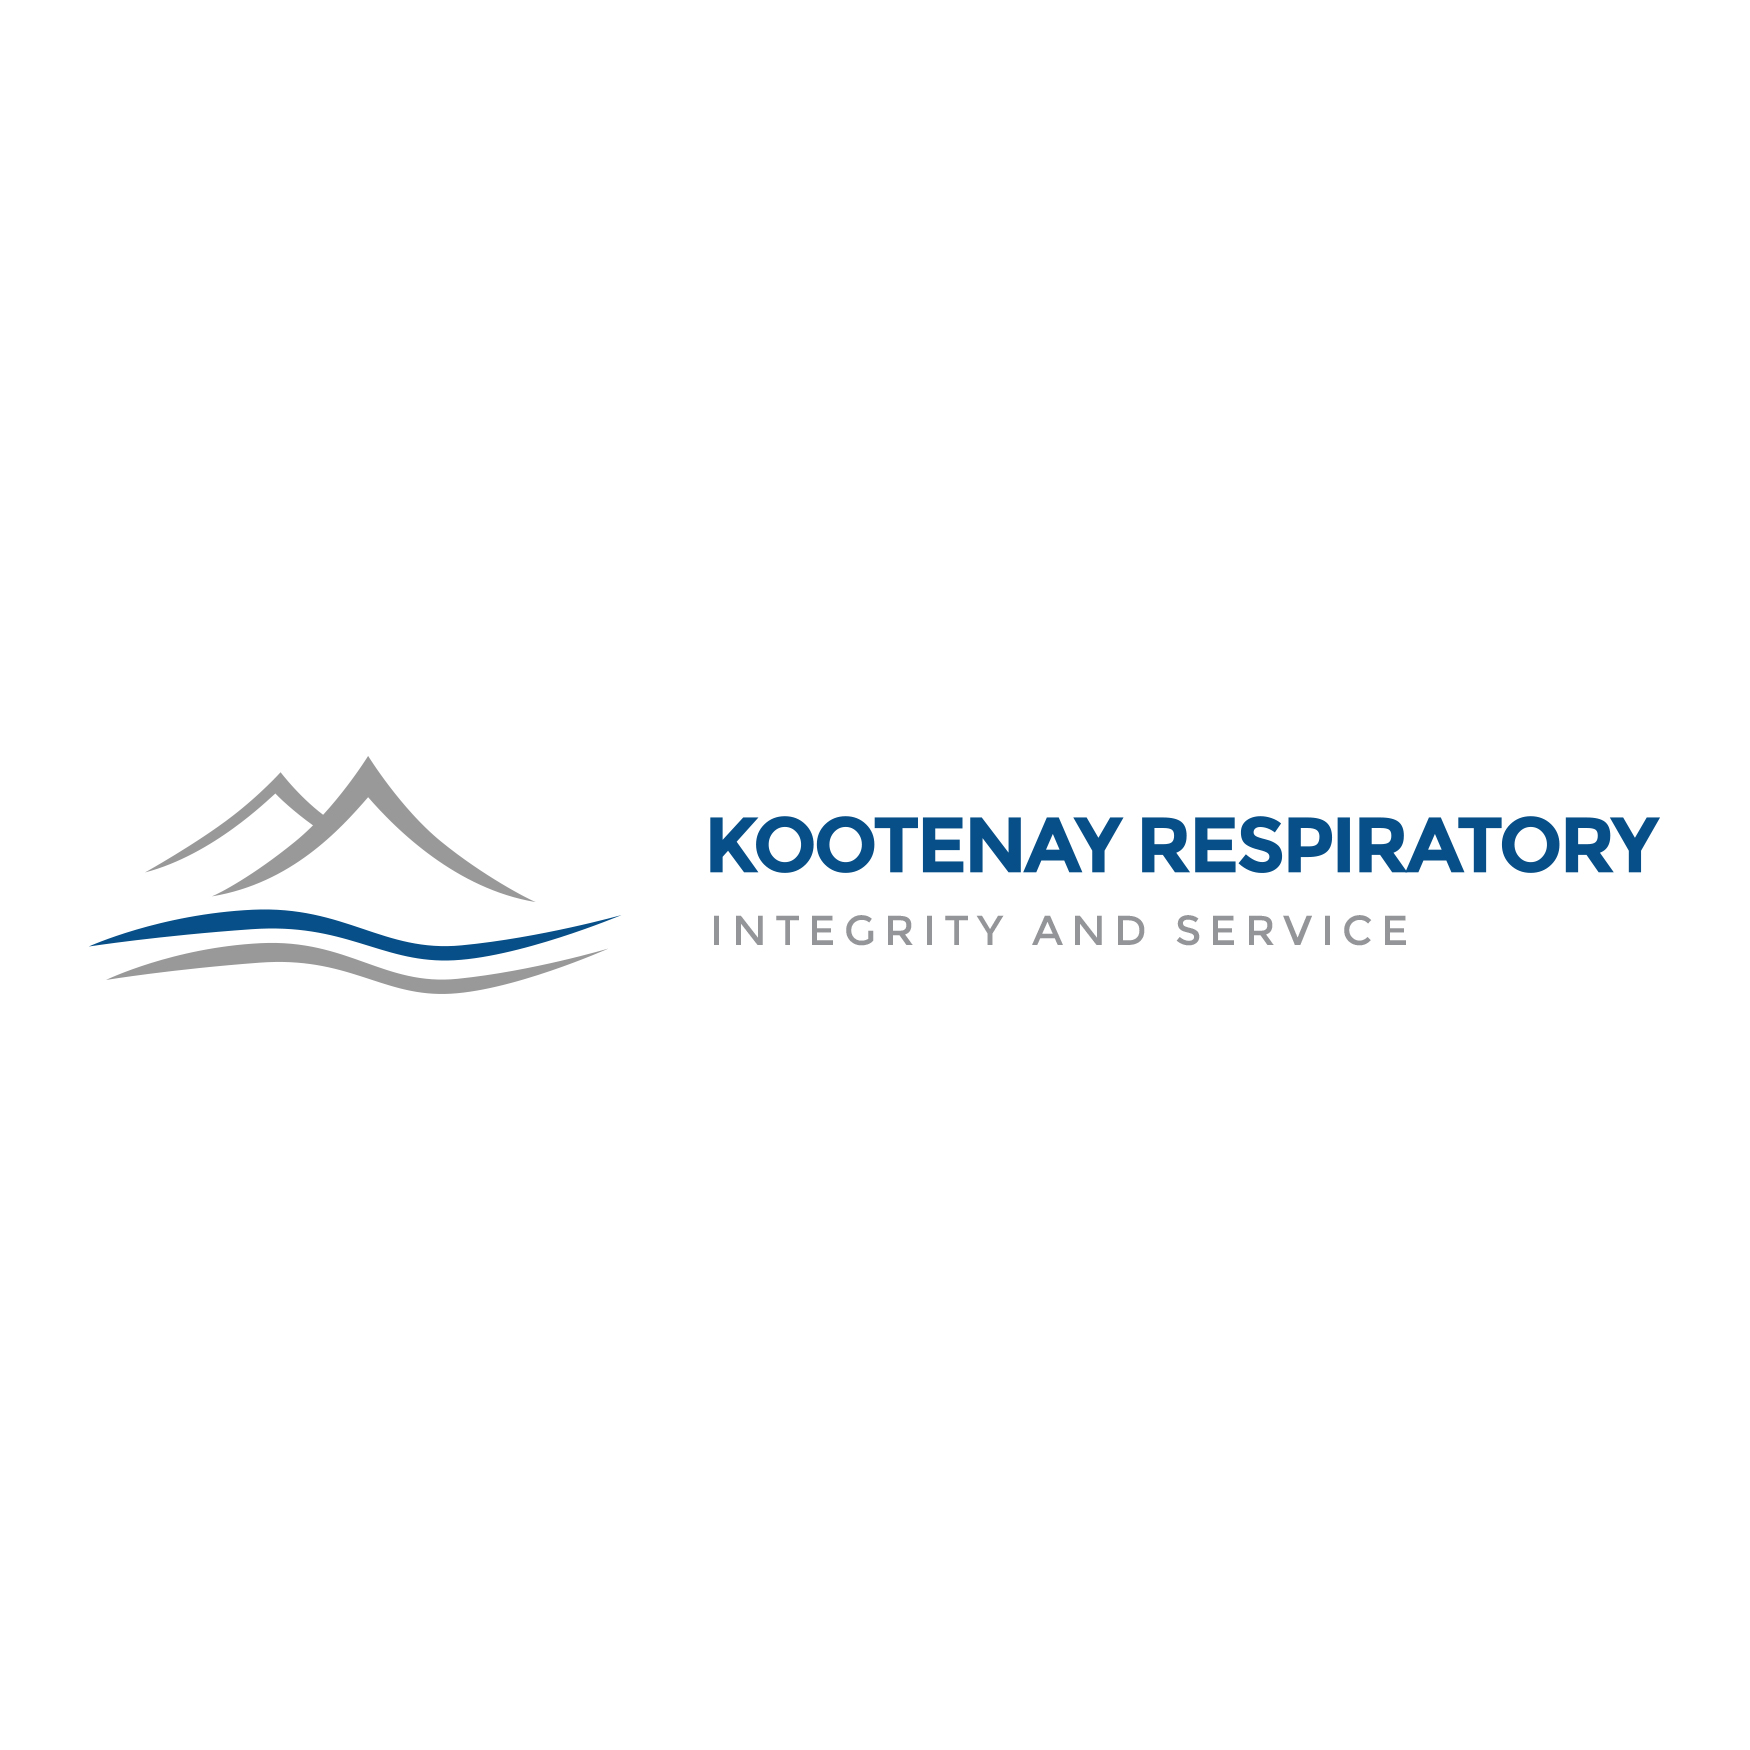 Kootenay Respiratory